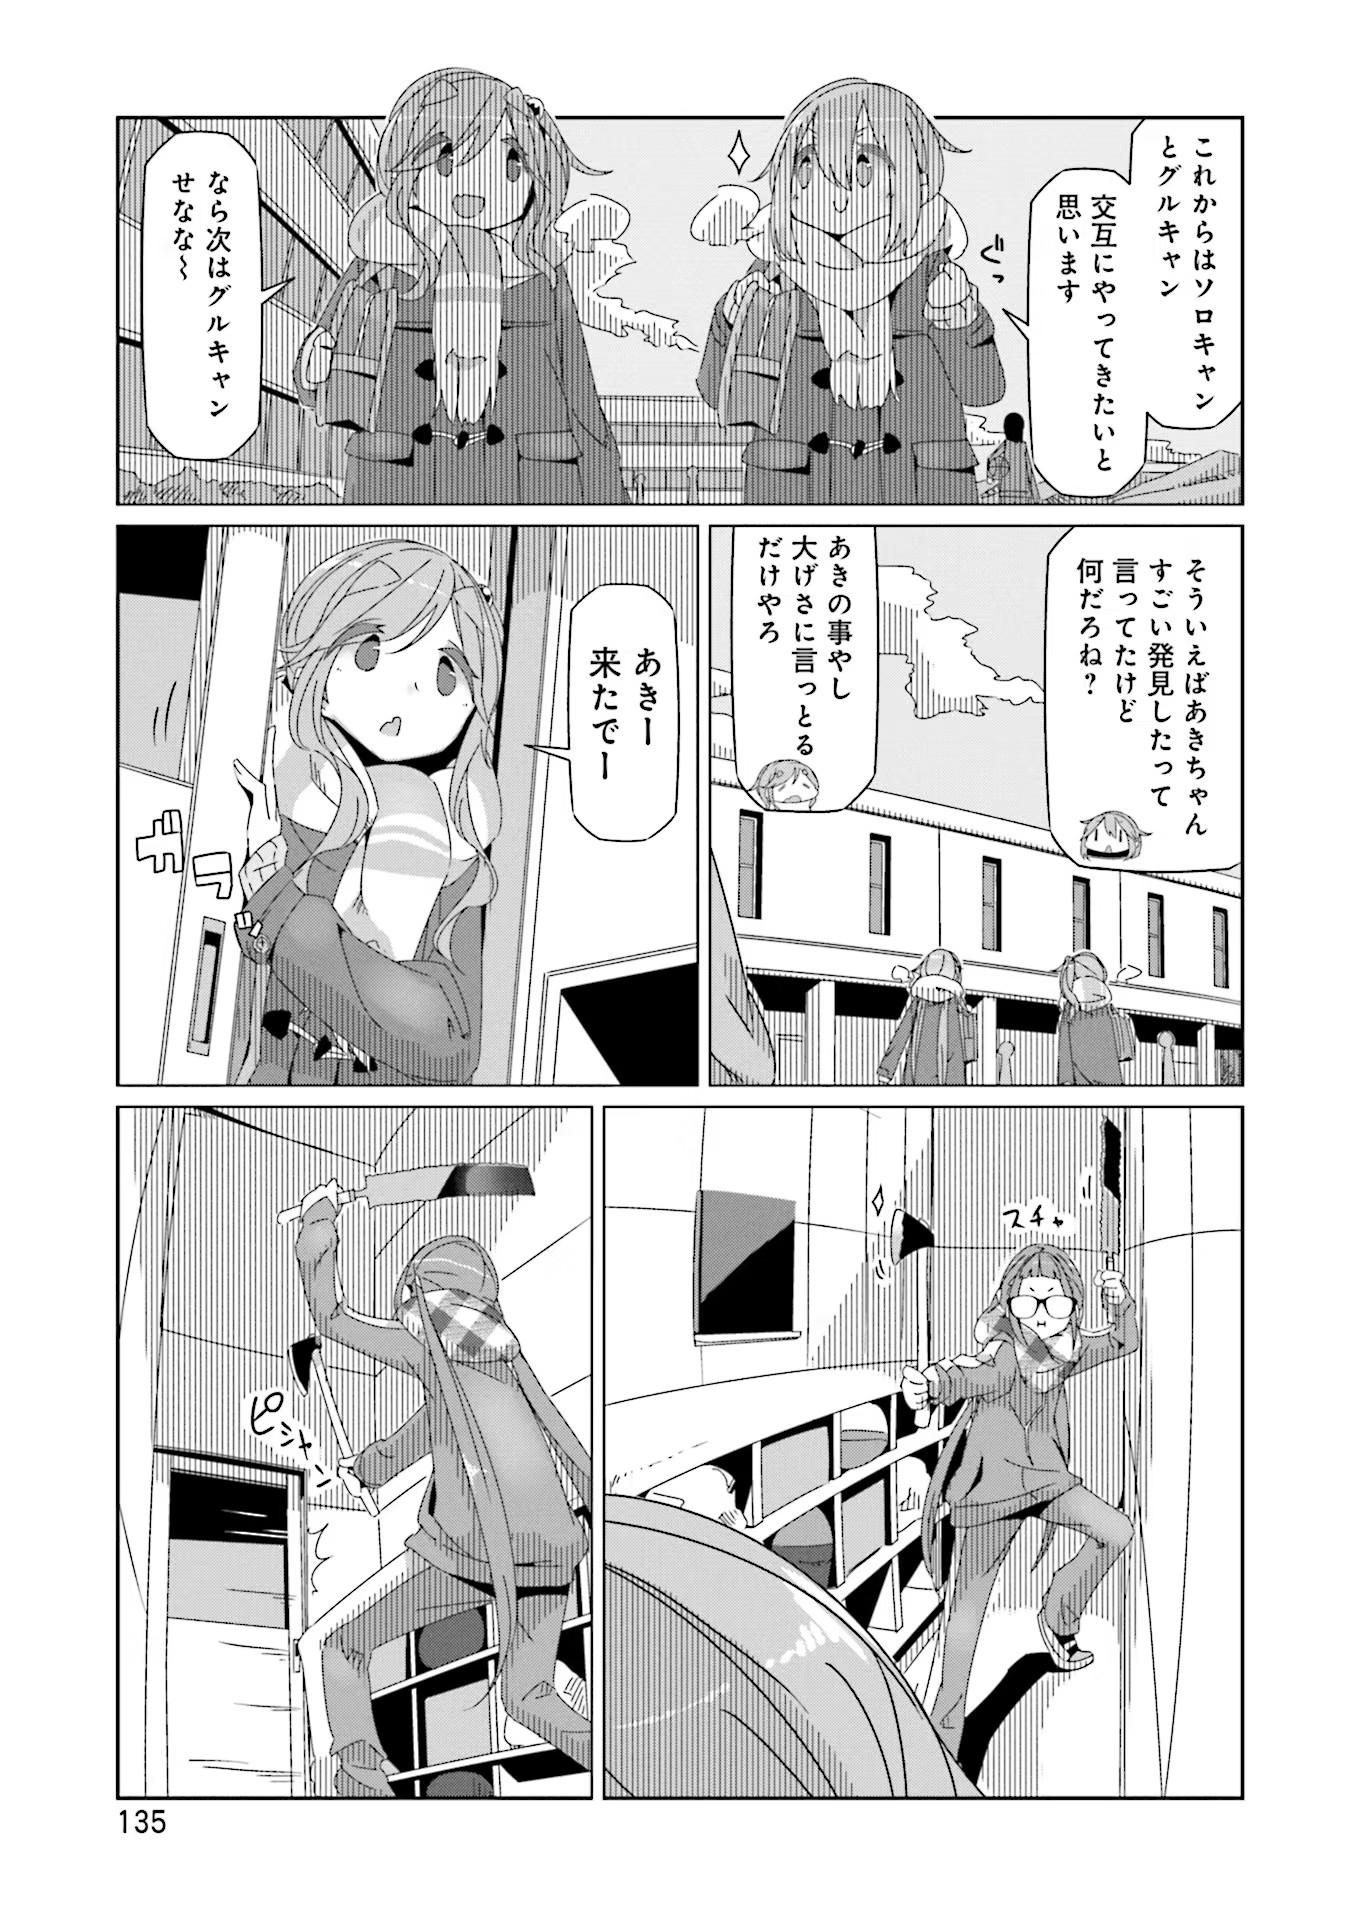 Yuru Camp - Chapter 40 - Page 3